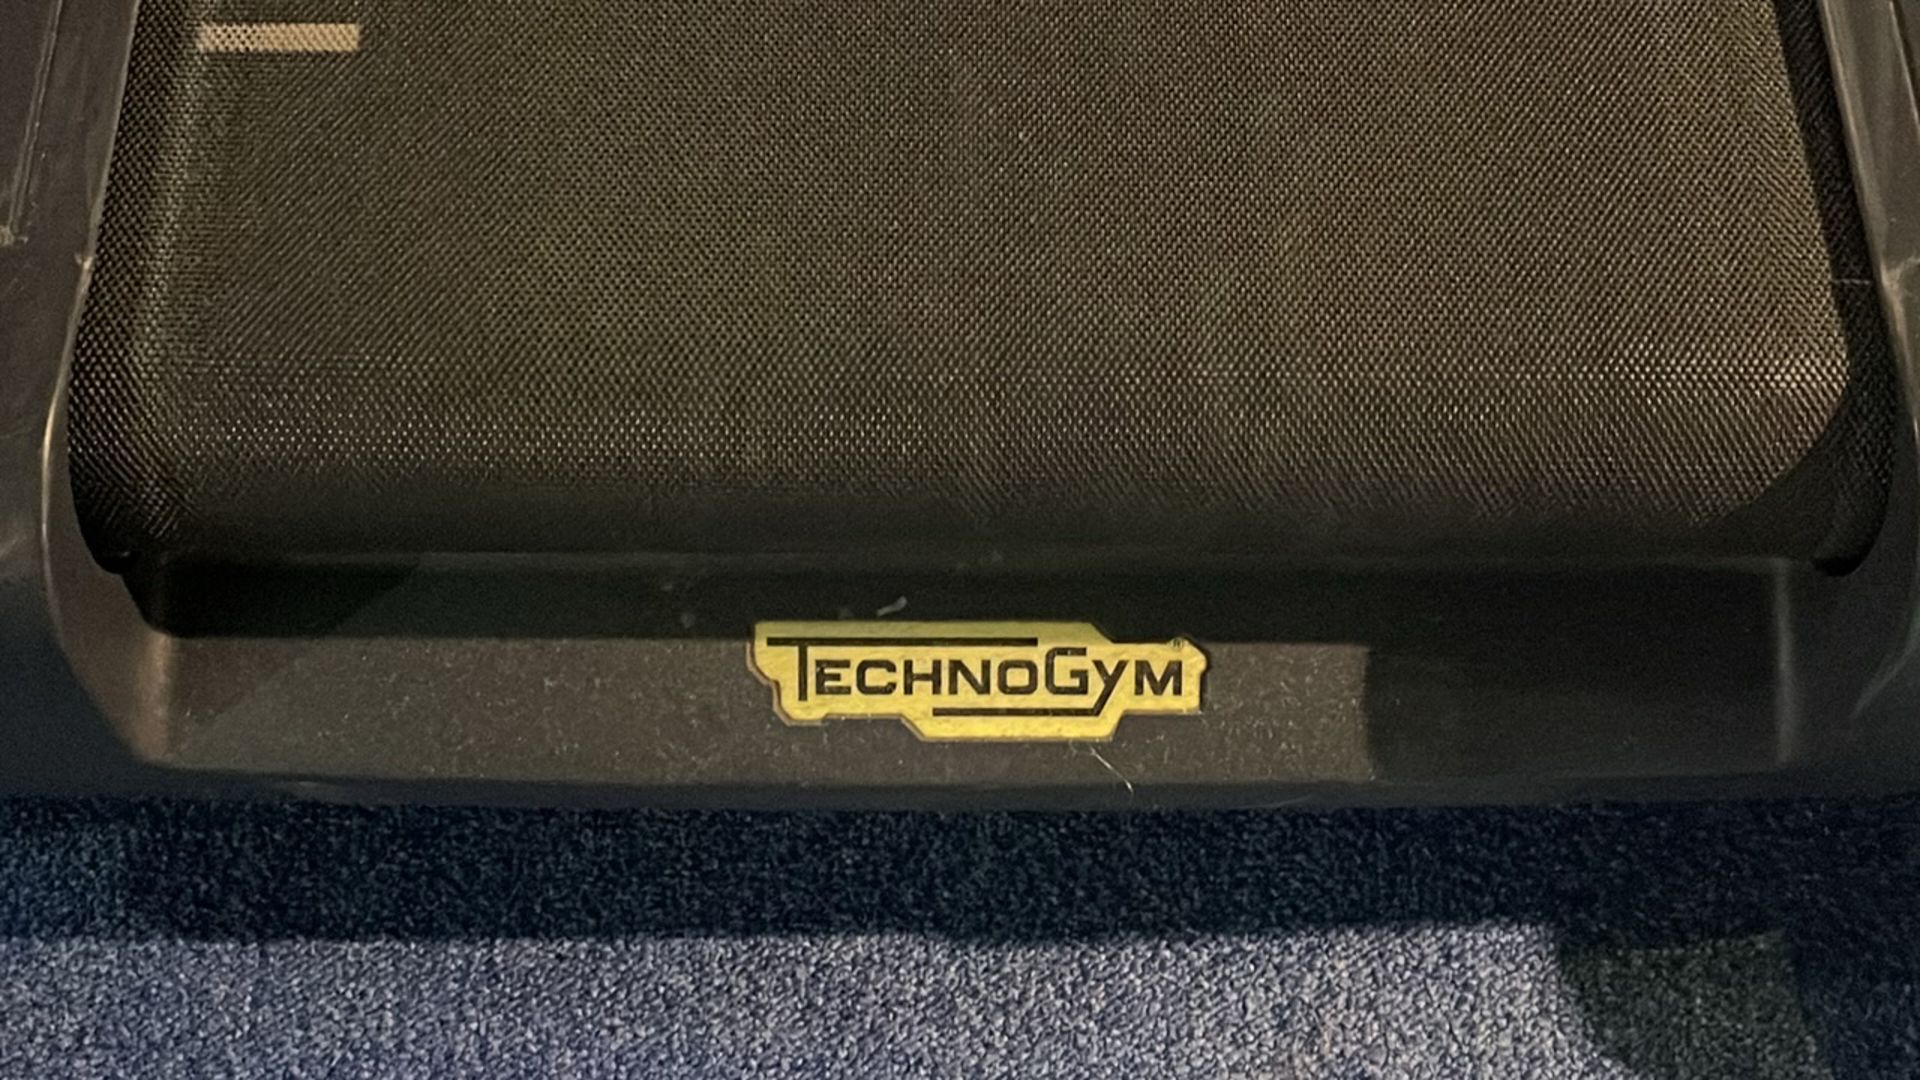 Technogym Treadmill 1000 - Image 3 of 8